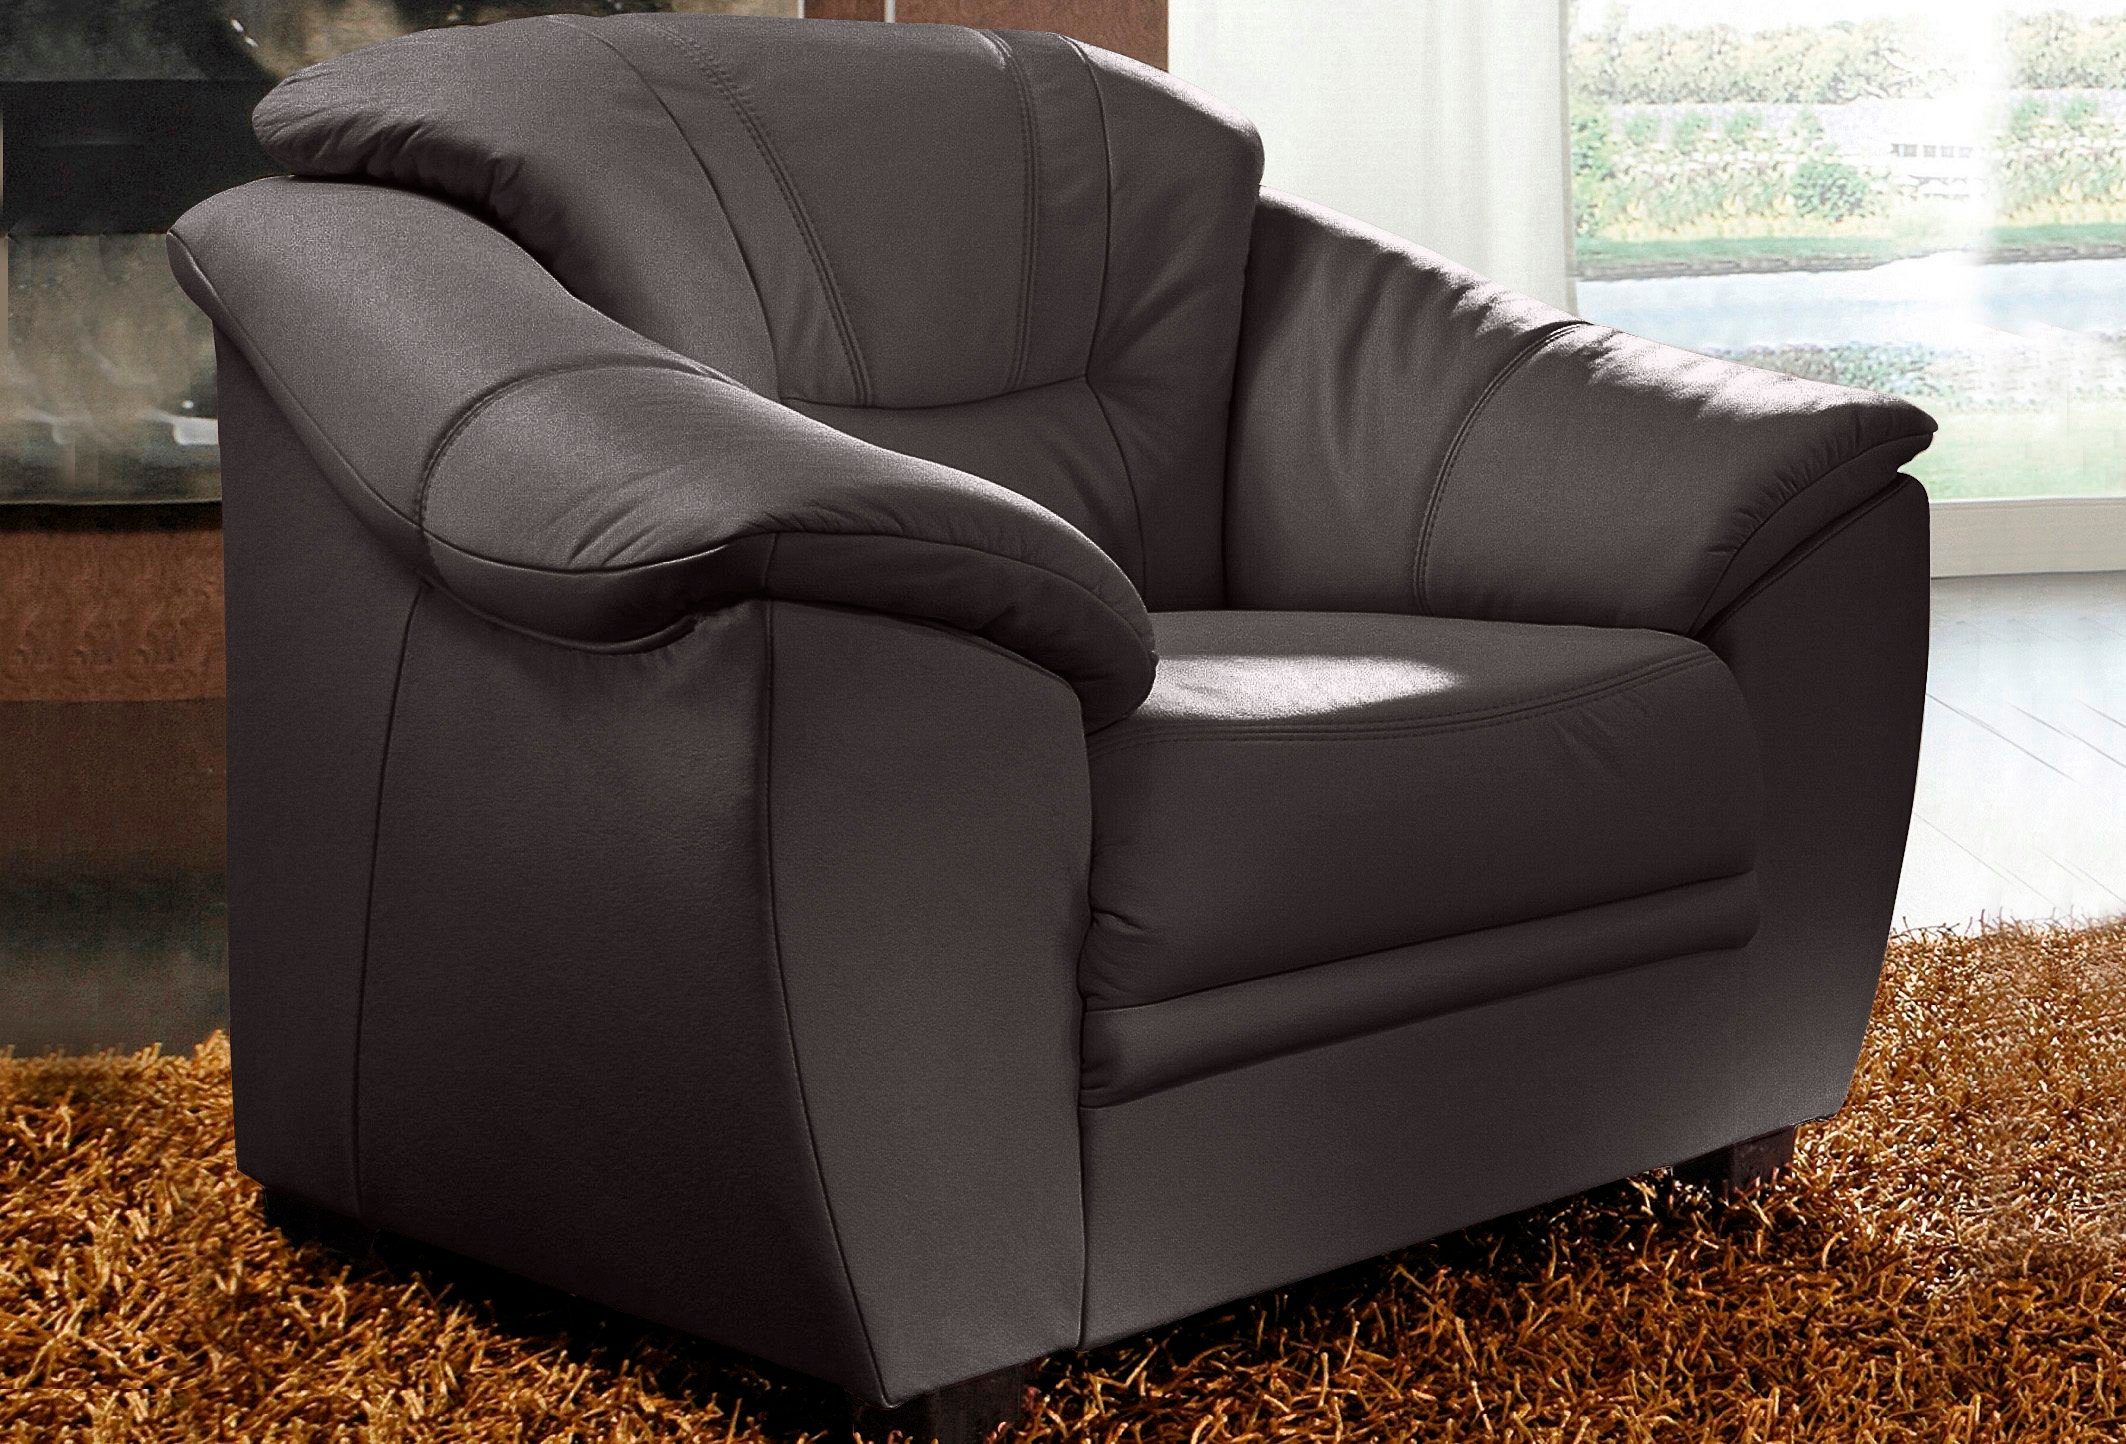 sitmore fauteuil savona naturleder, inclusief comfortabele binnenvering bruin